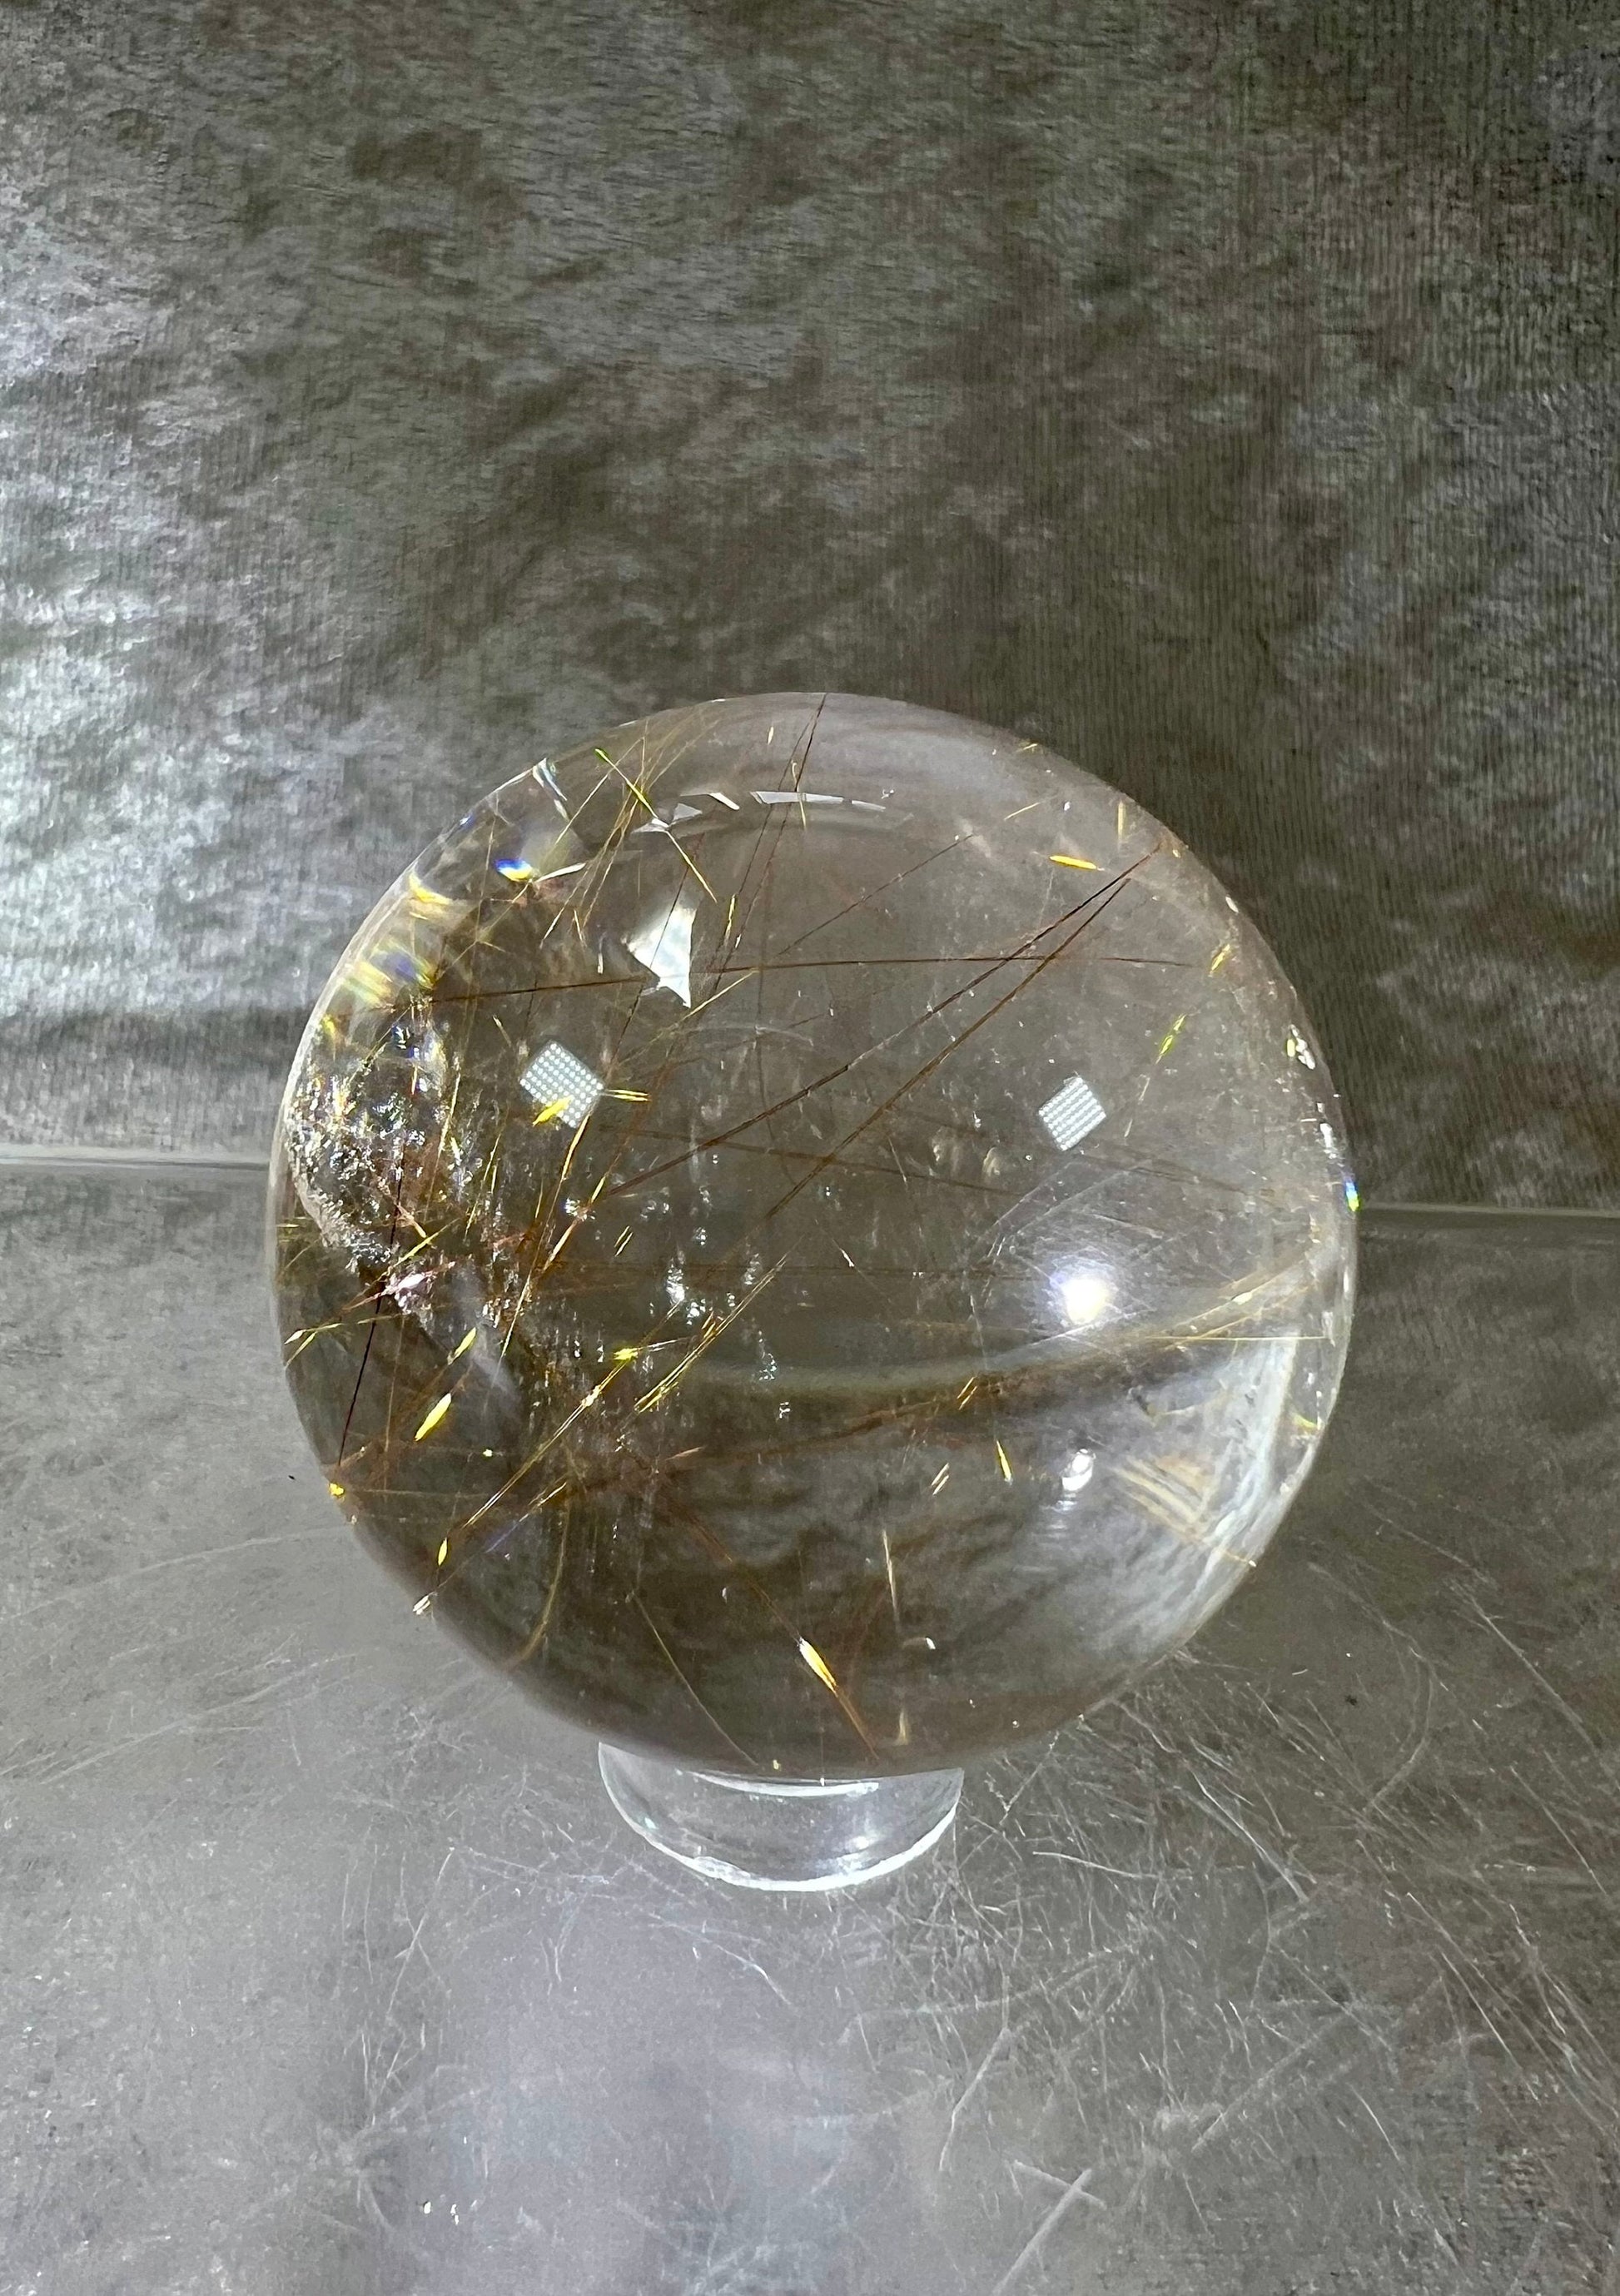 Gorgeous Golden Rutile Quartz Sphere. Big Rainbows! High Quality Incredible Rutilated Quartz Sphere.